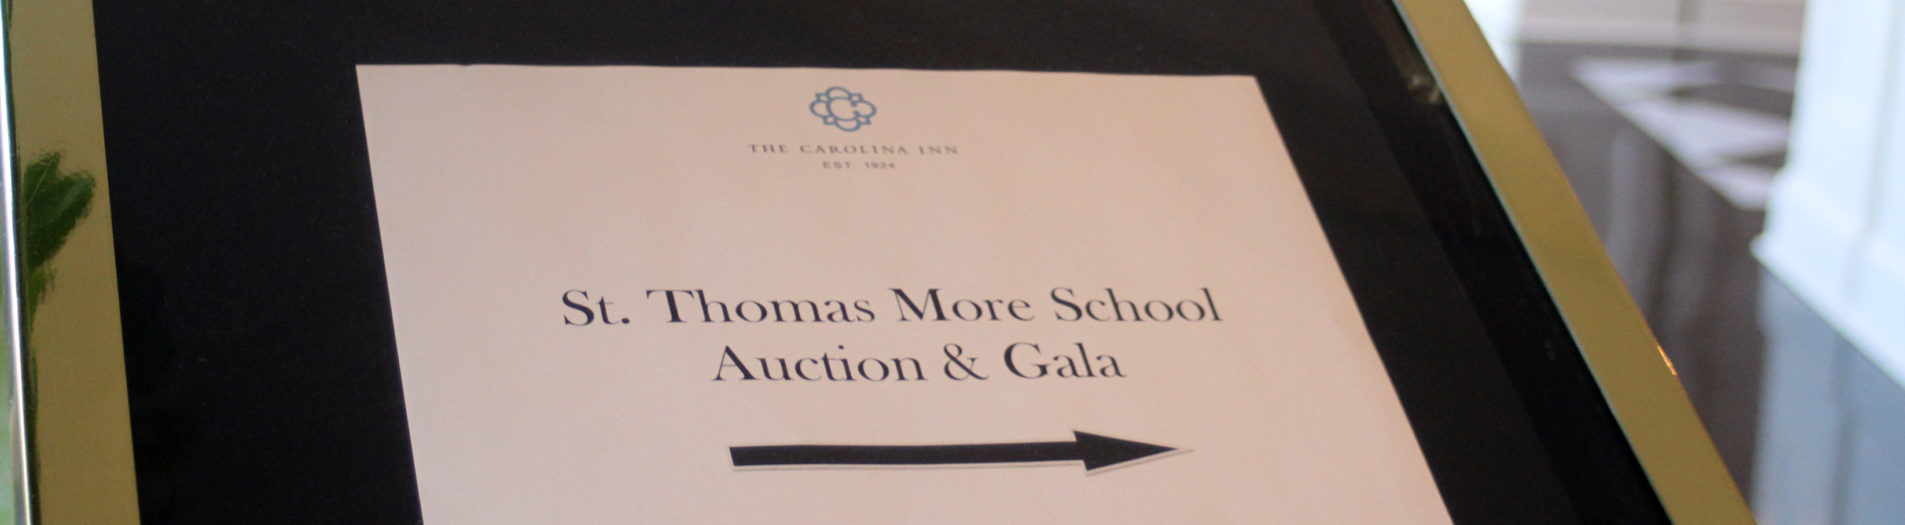 St Thomas More's Gala & Auction at Carolina Inn was a hit!